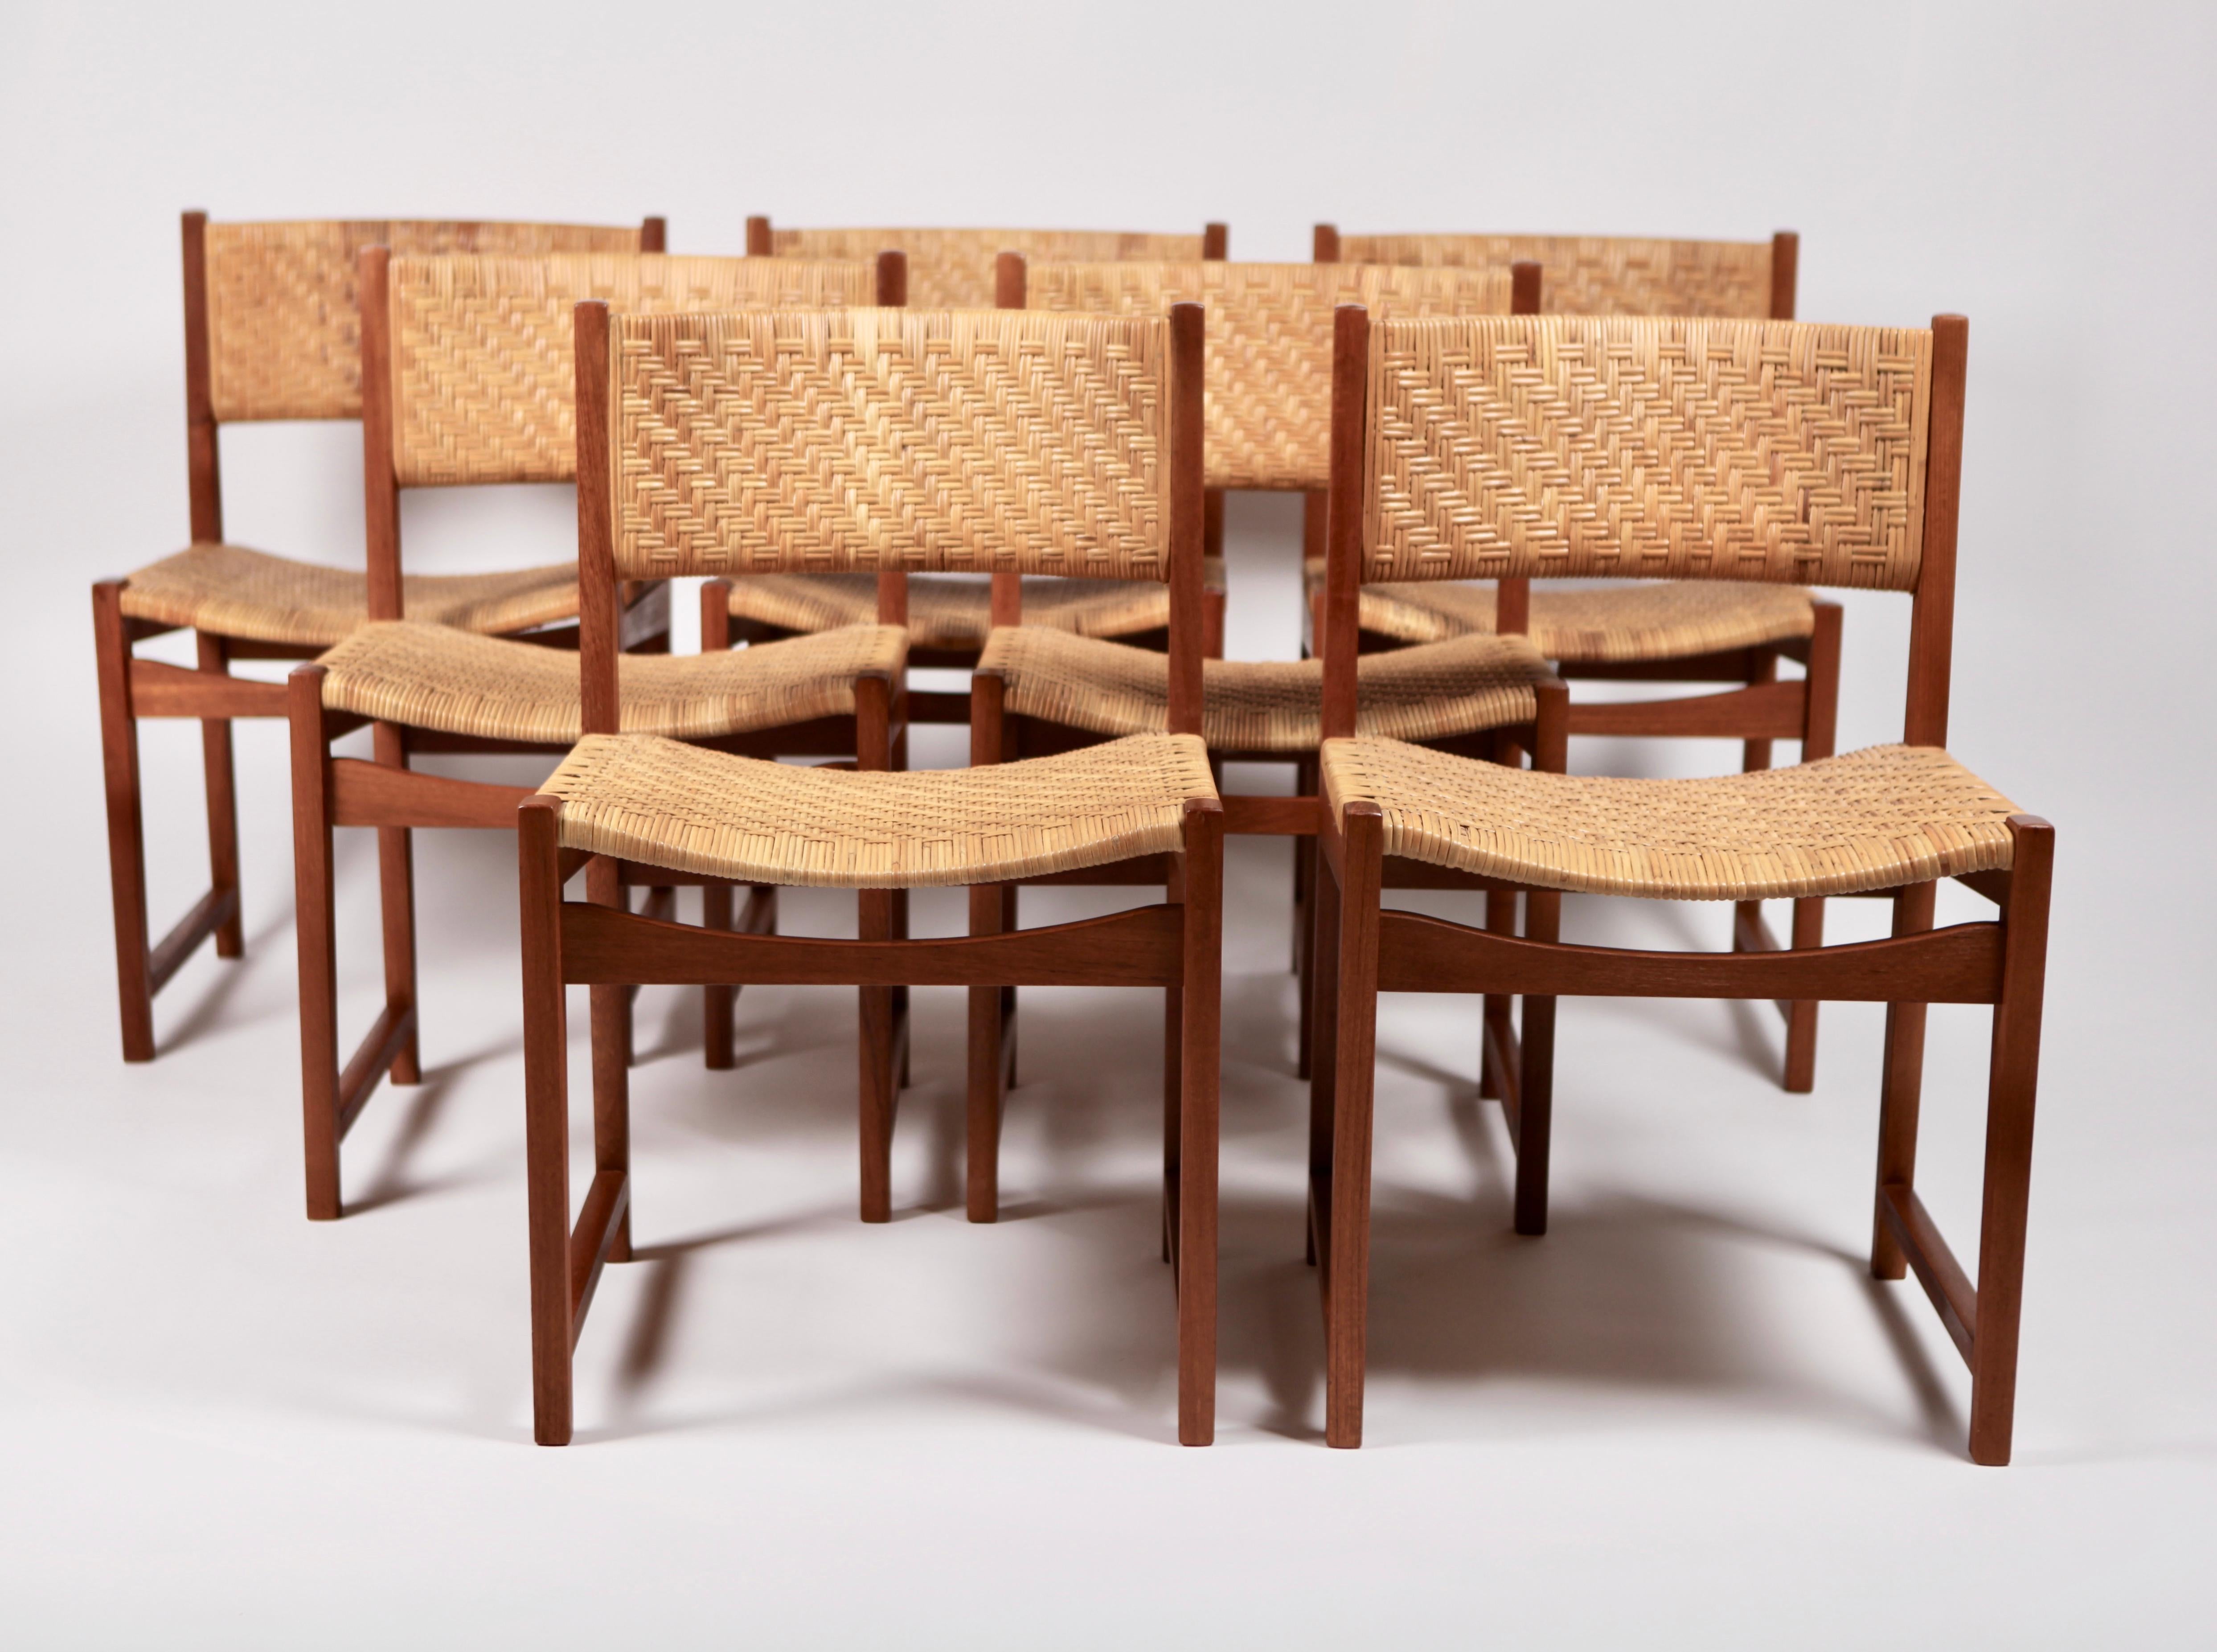 Rare set of seven dining chairs, model 350, designed in 1957 by Peter Hvidt & Orla Mølgaard-Nielsen.
Produced by Søborg Møbler in Denmark in the 1960s.
Excellent vintage condition.
   